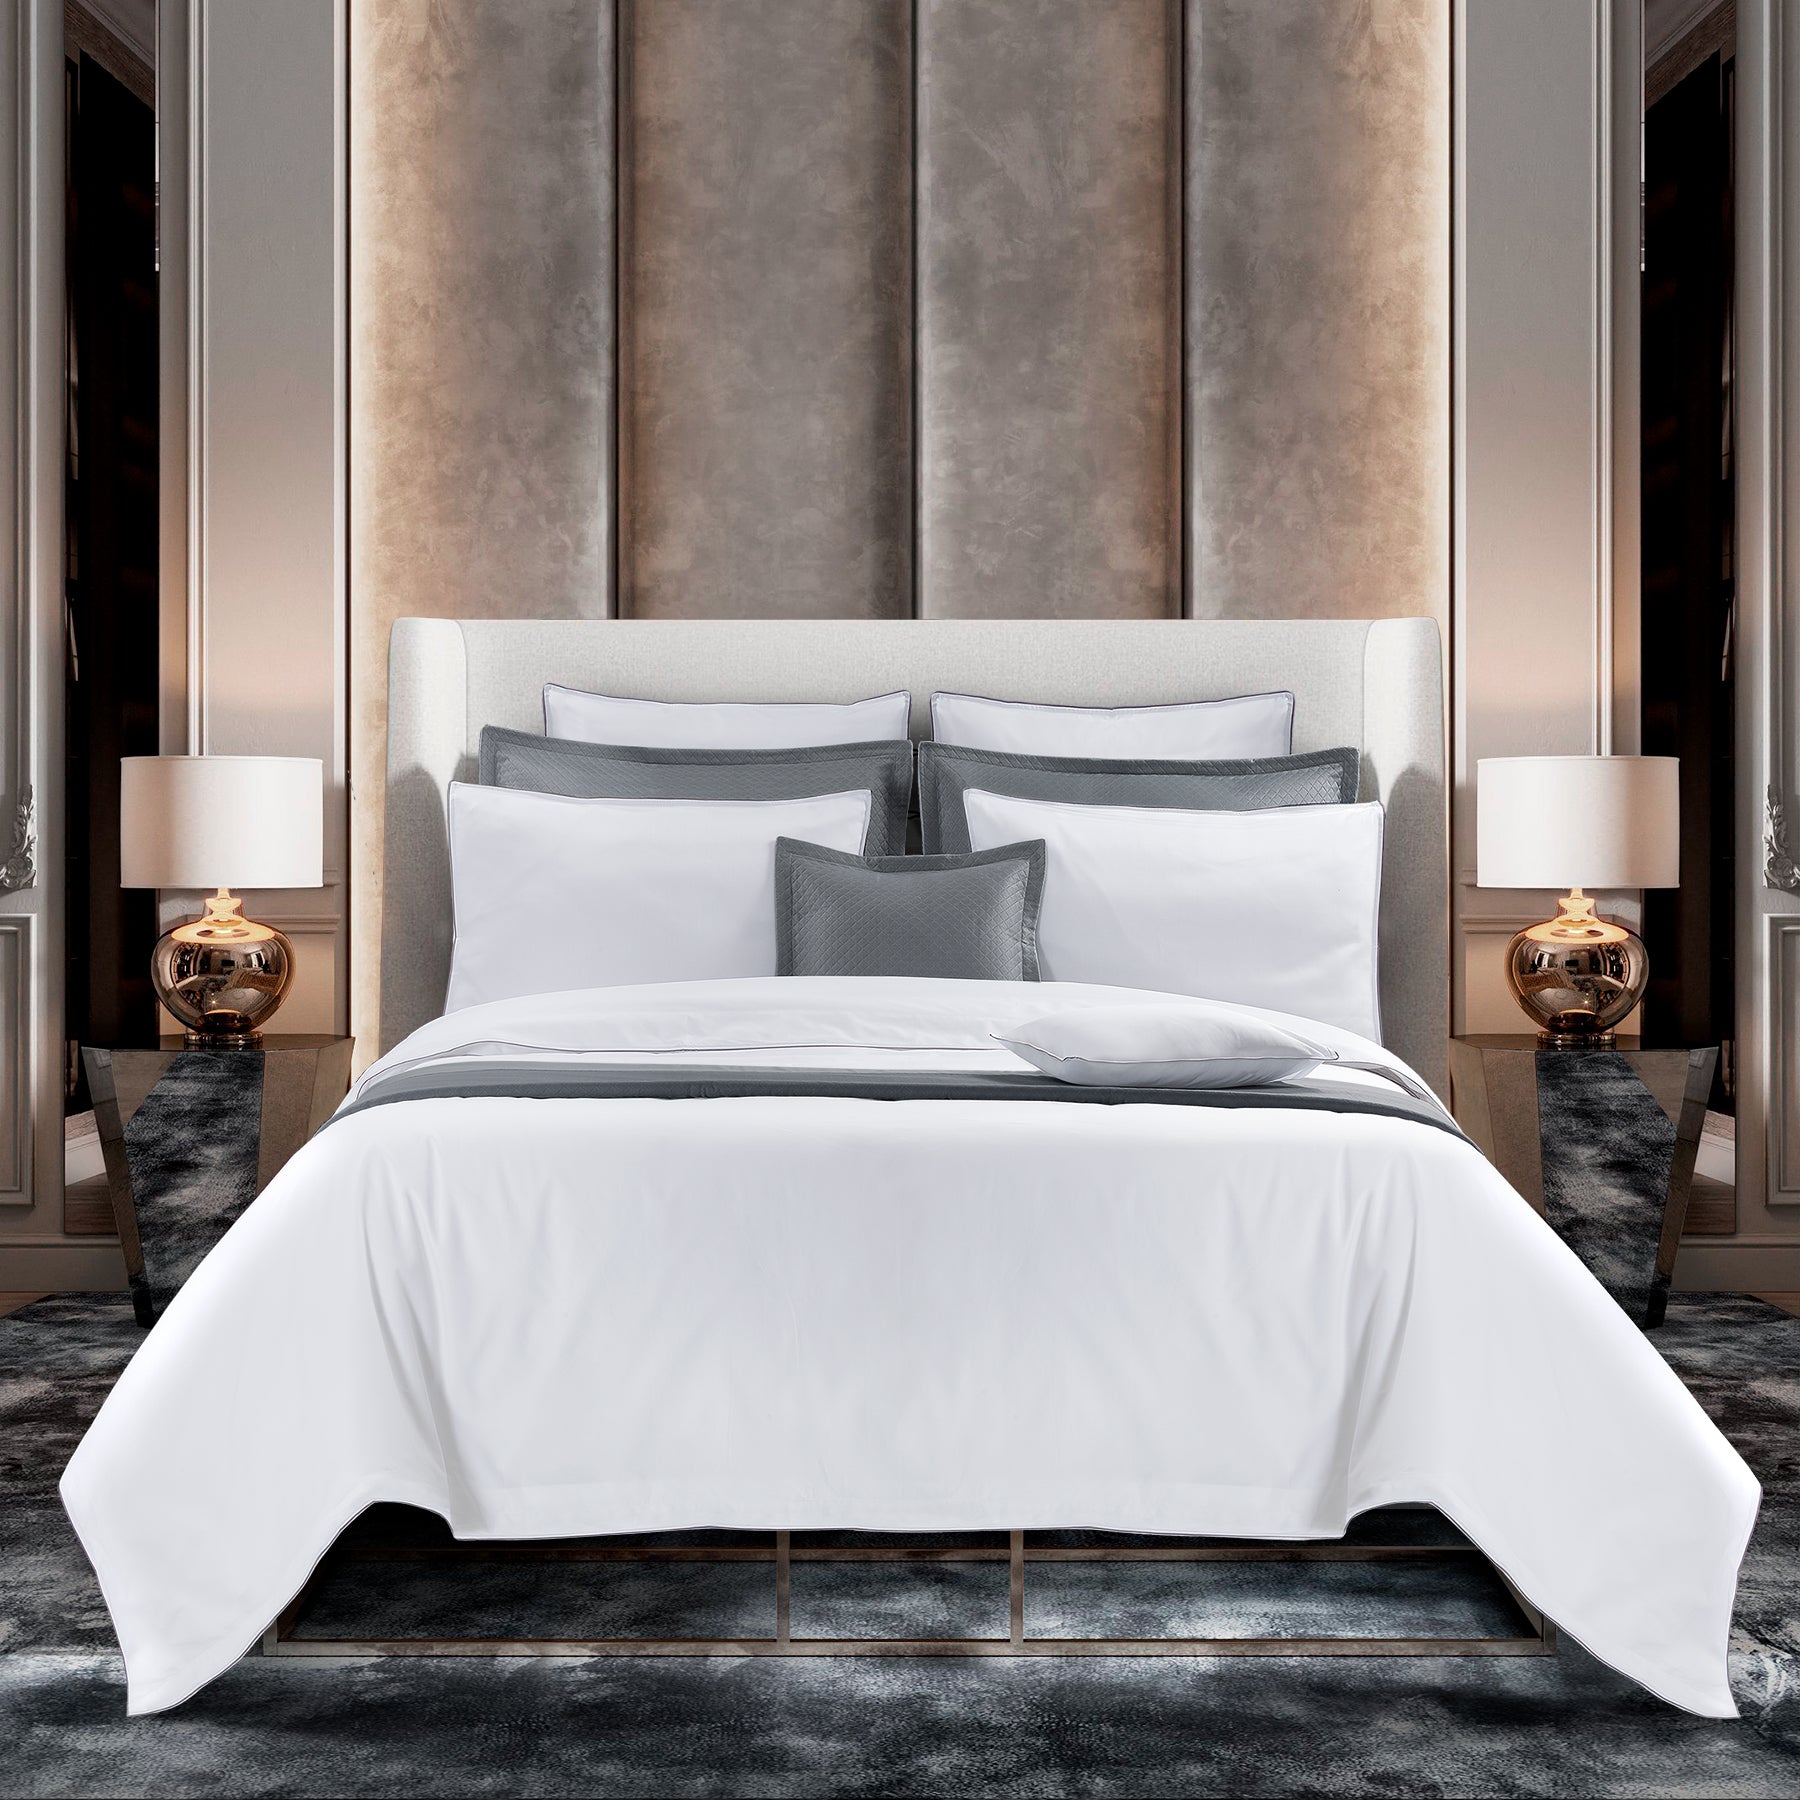 Portofino luxury bedding percalle cotton by Emilia Burano Italy